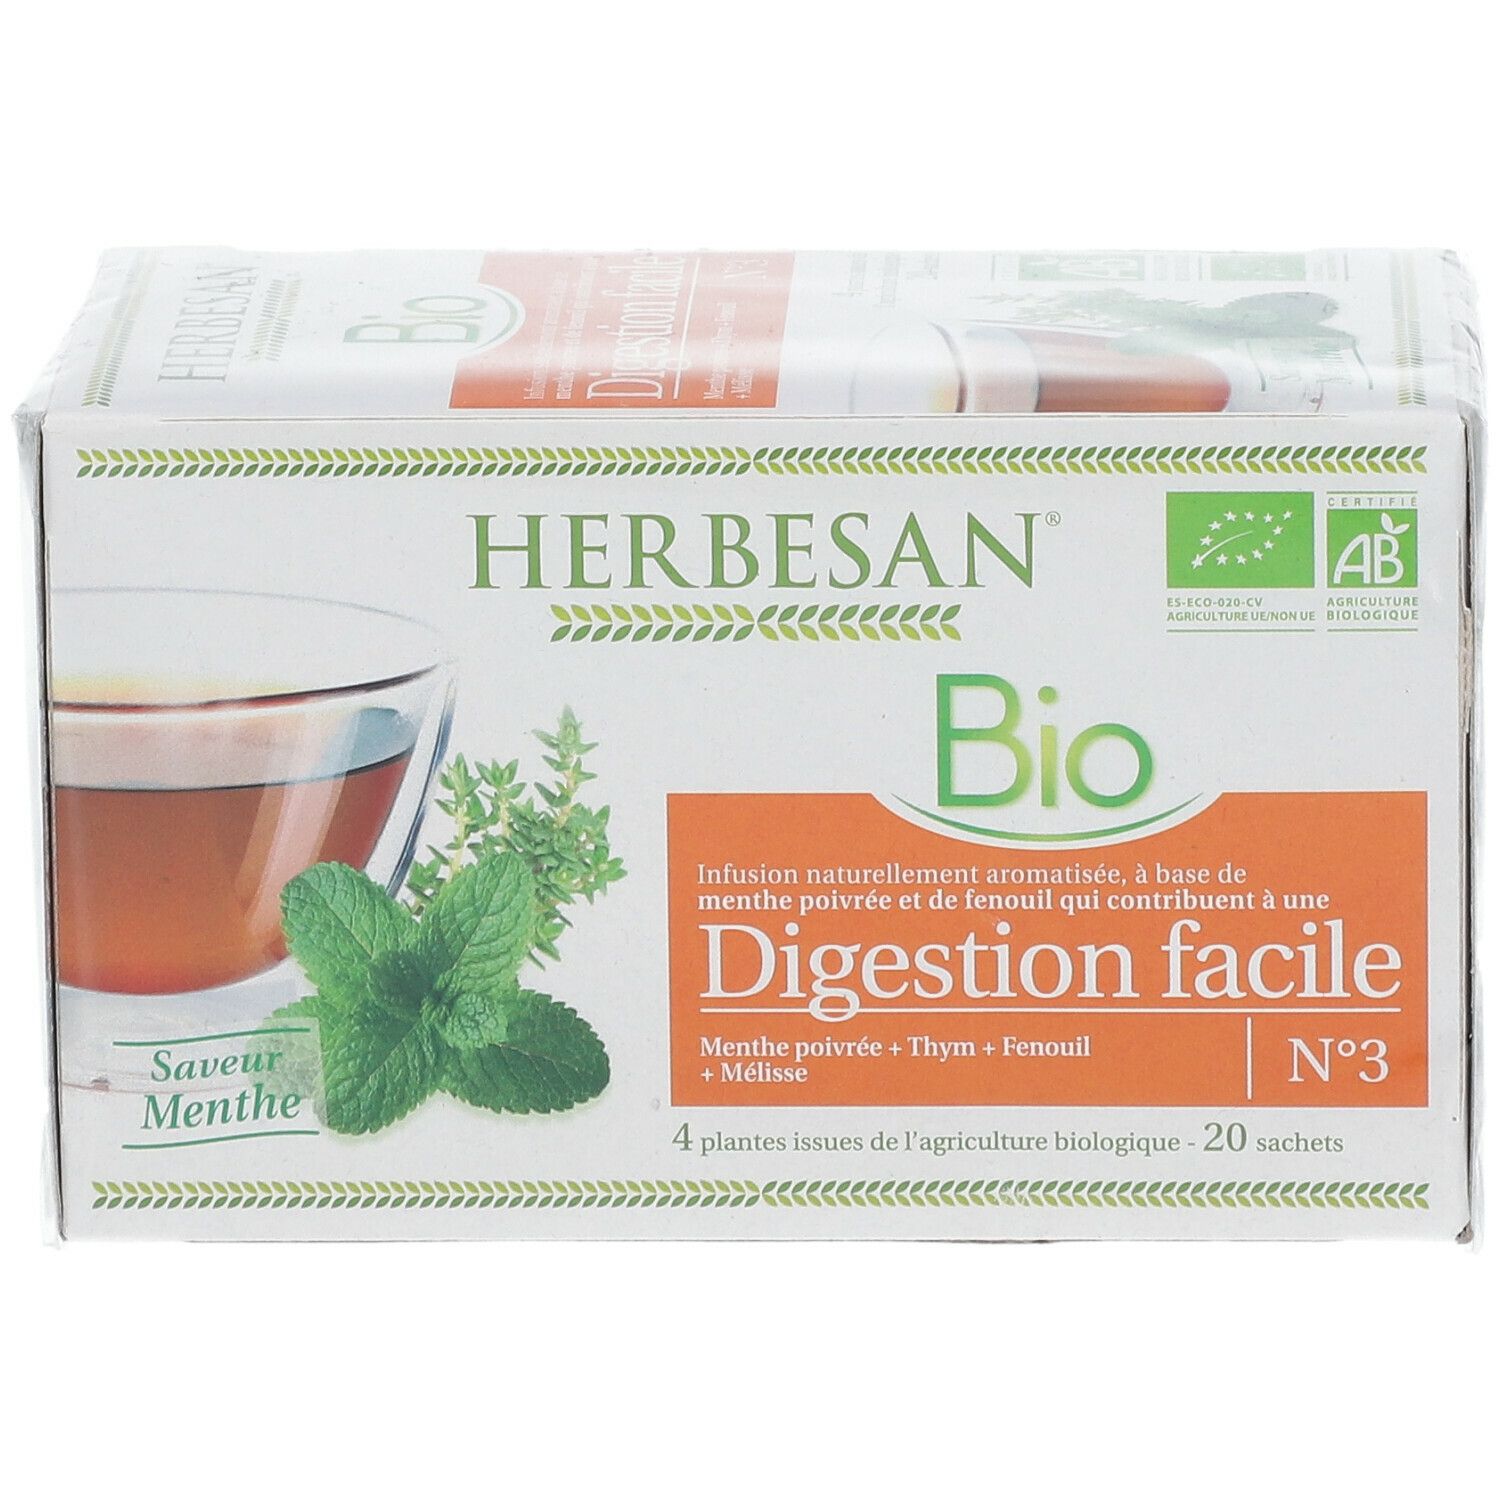 Herbesan® infusion Digestion facile bio